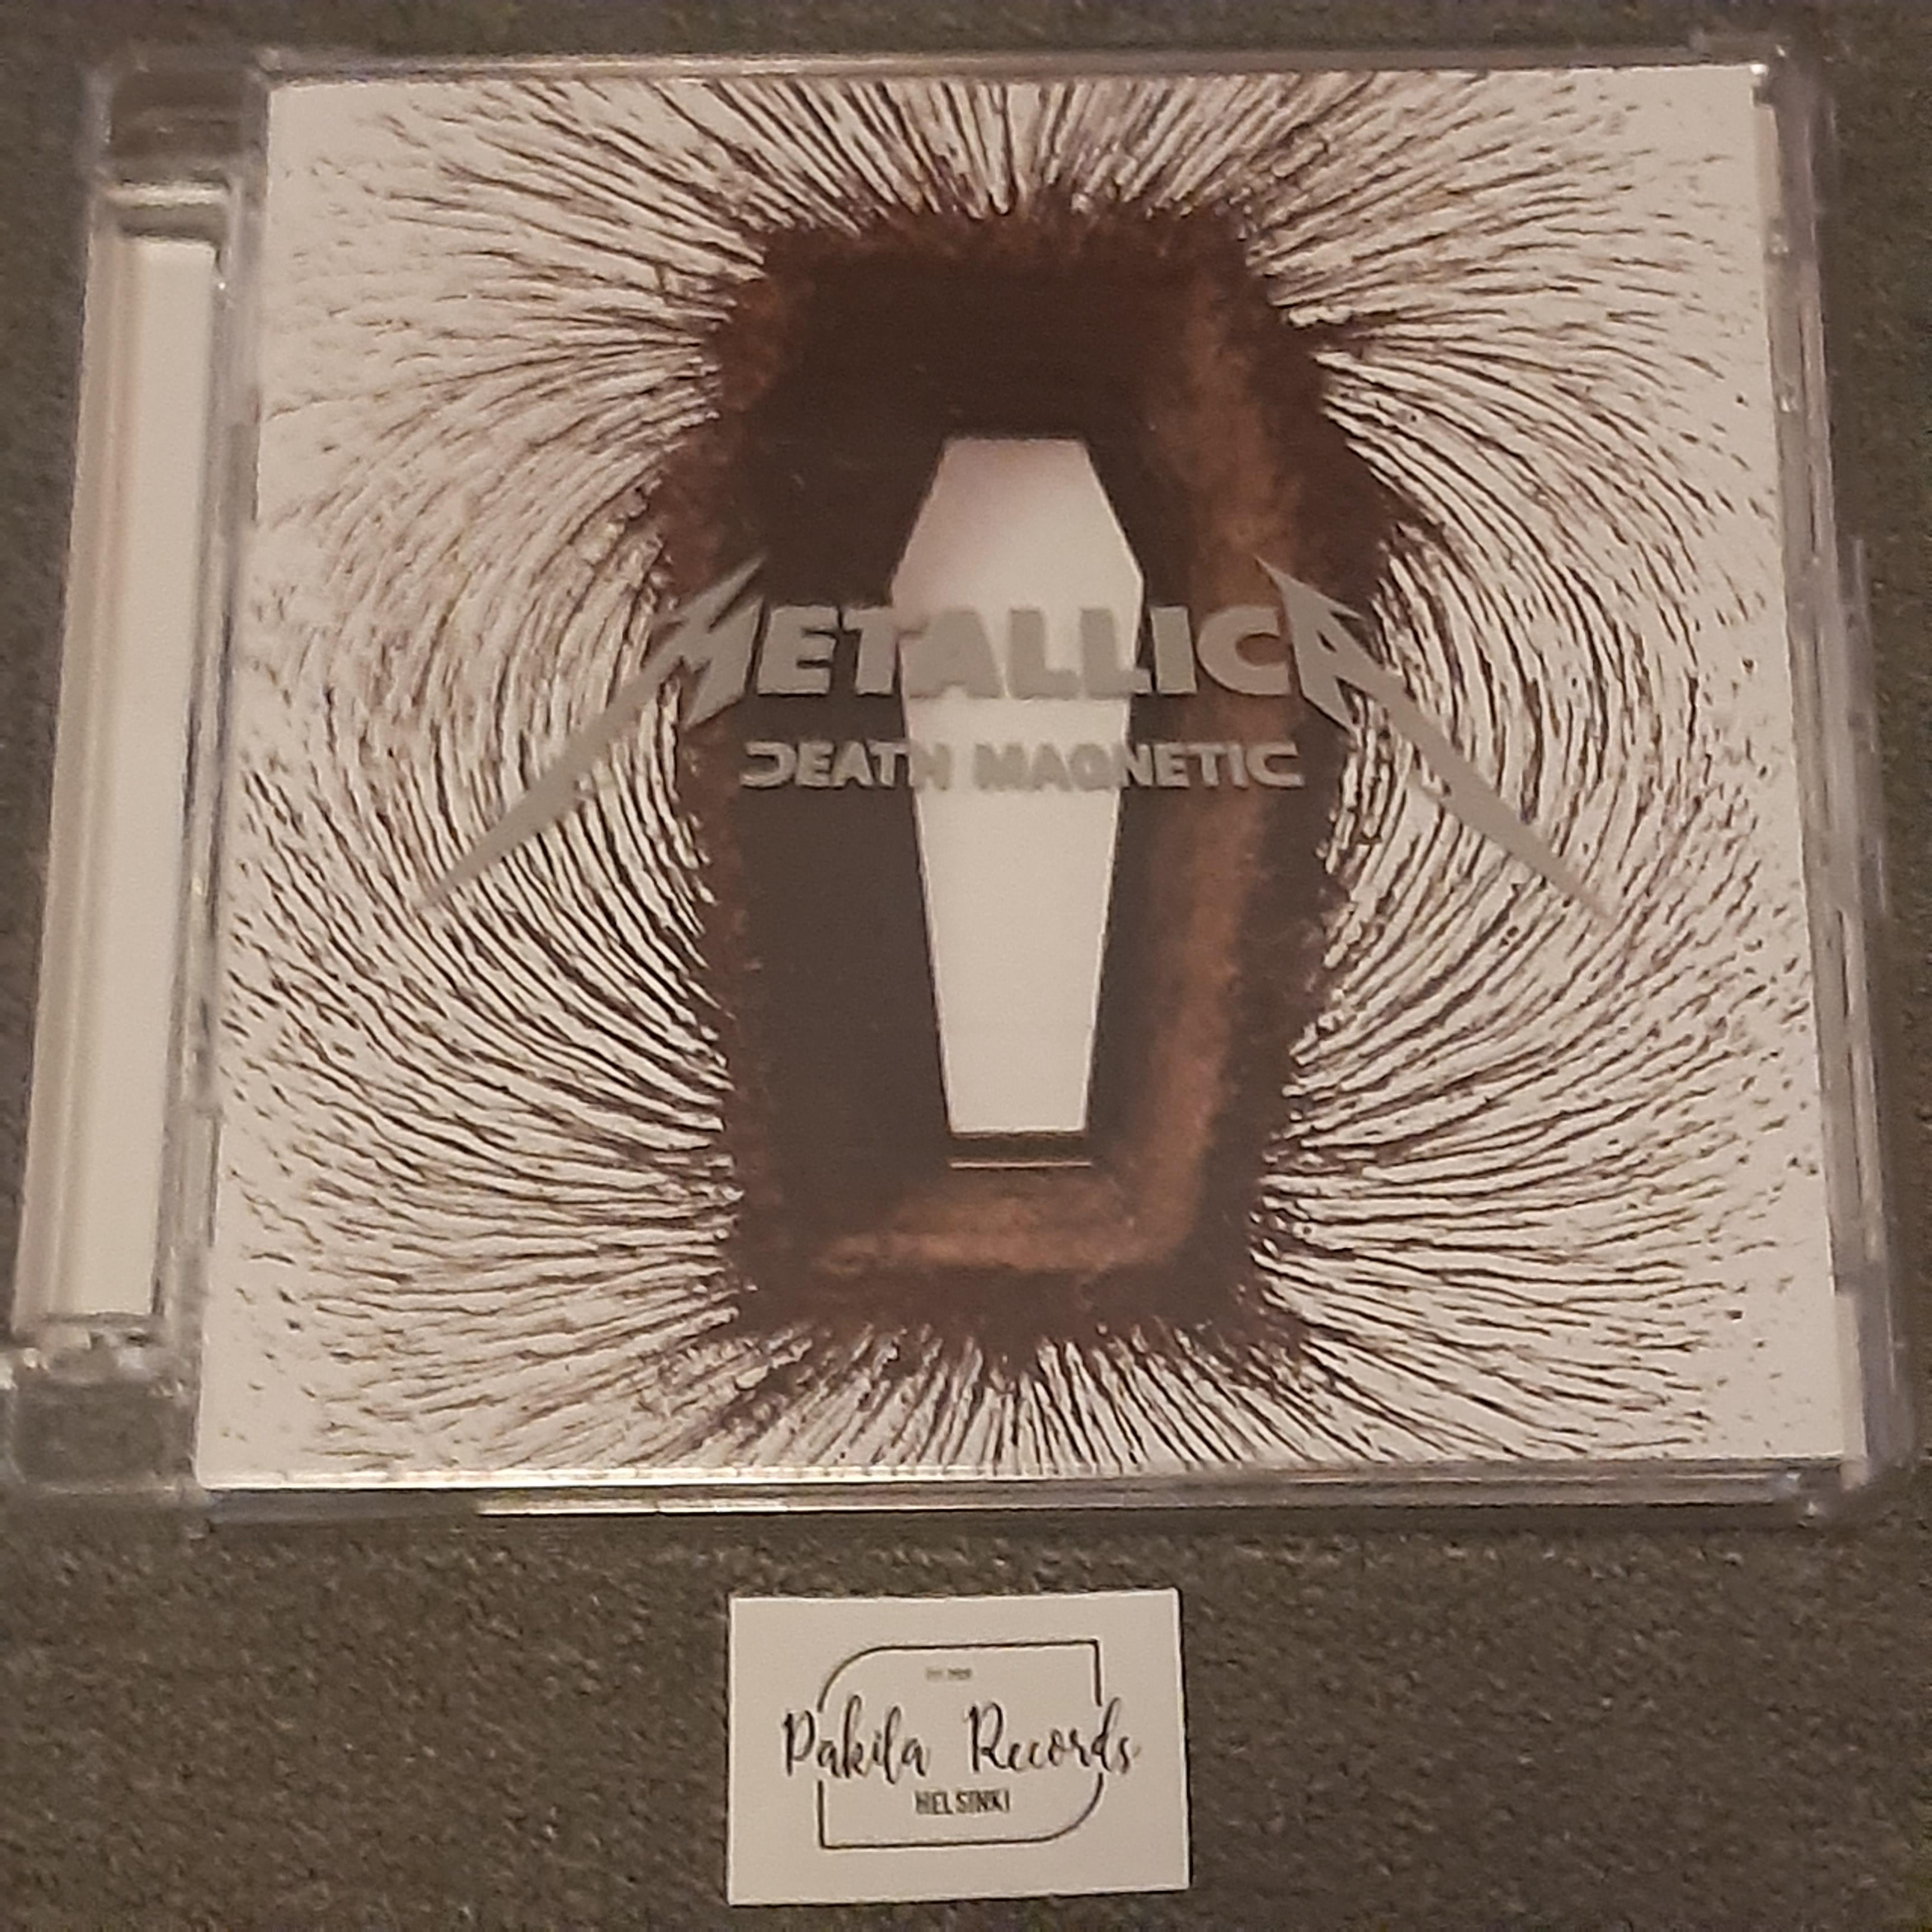 Metallica - Death Magnetic - CD (käytetty)